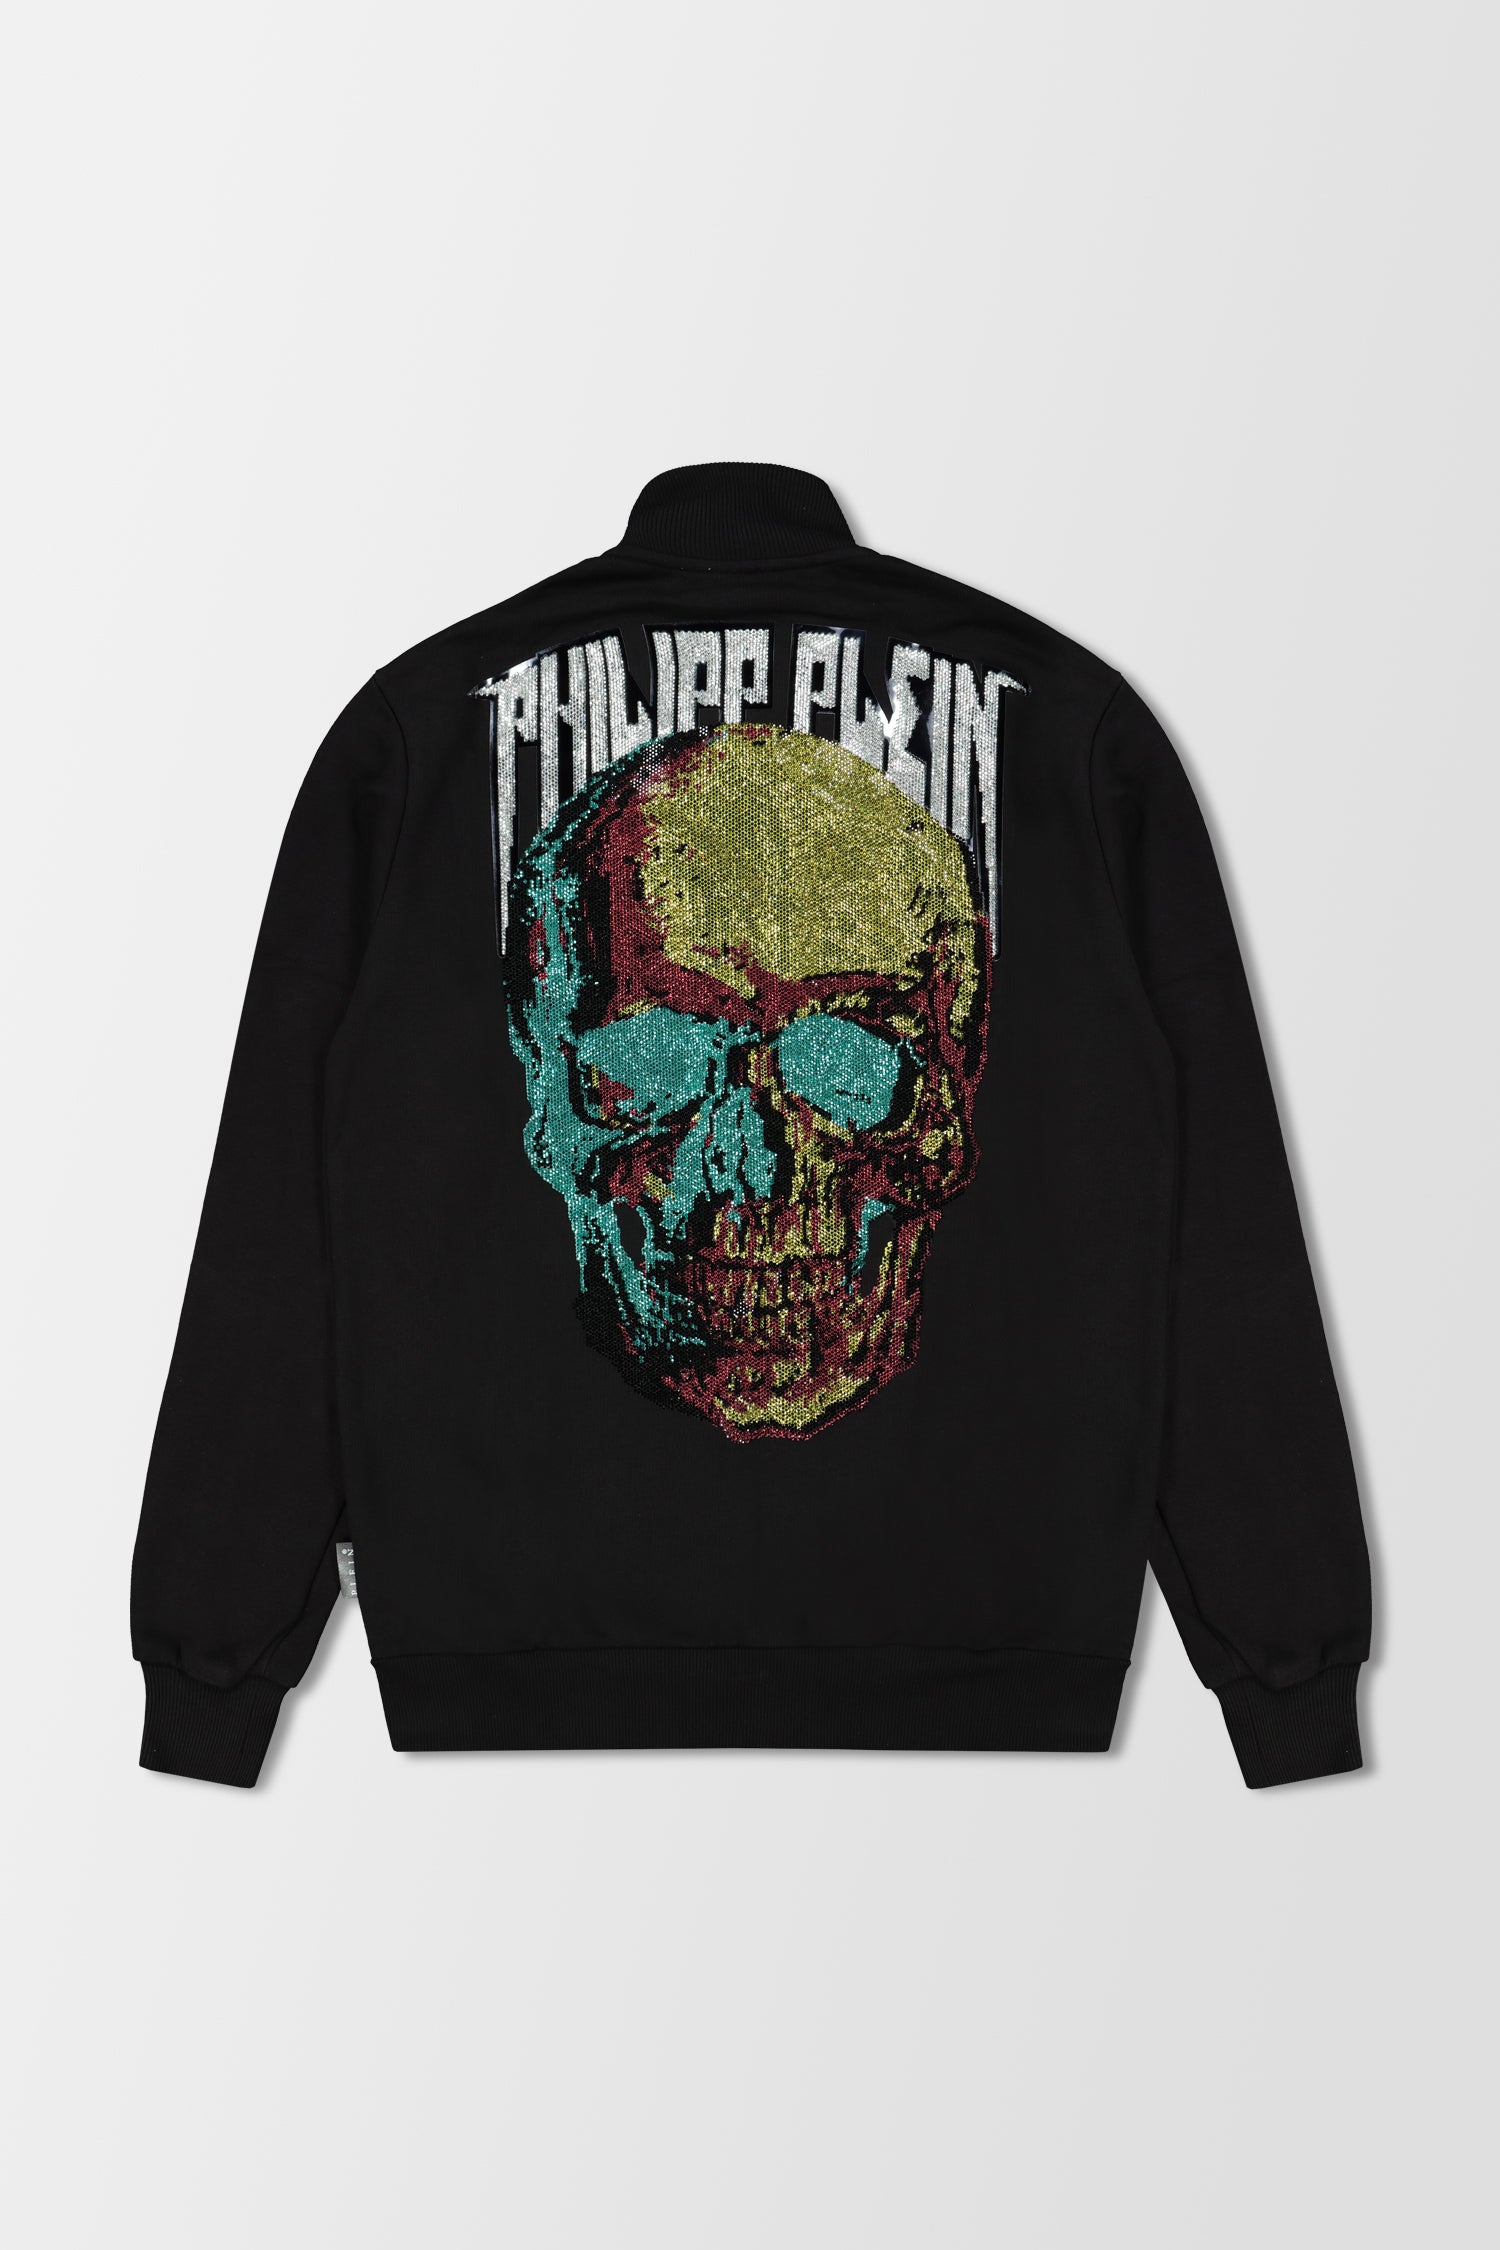 Philipp Plein Black Jogging Jacket Skull And Plein